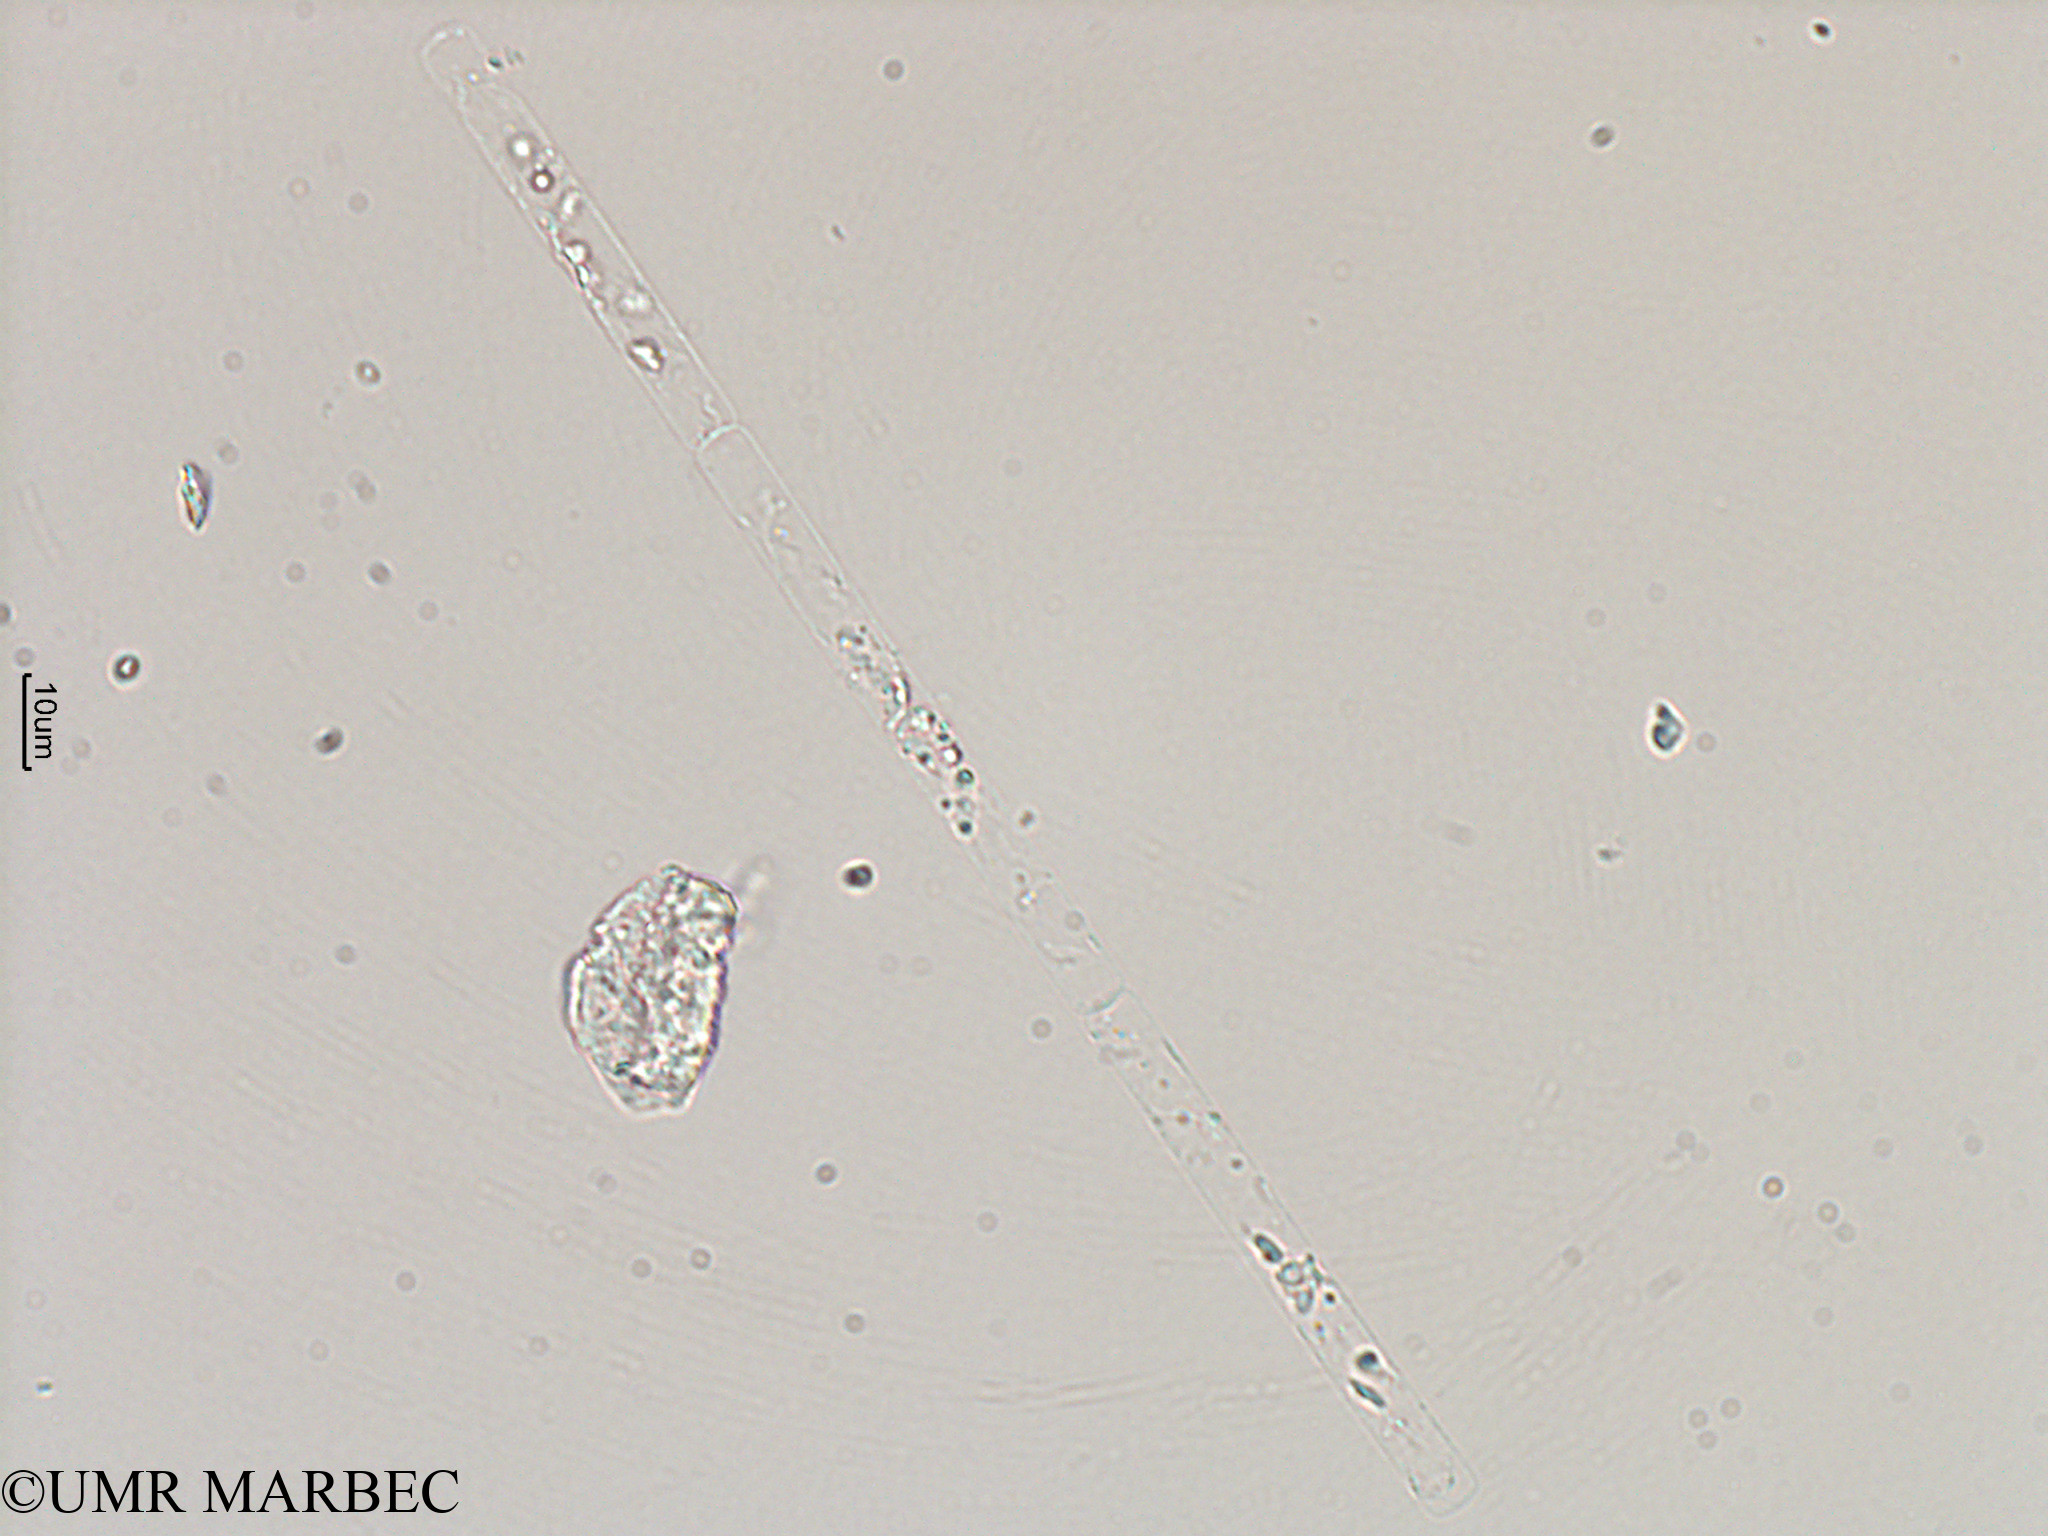 phyto/Thau_Lagoon/Thau_Breakwater/IMOCA April and June 2011/Leptocylindrus danicus  (3)(copy).jpg